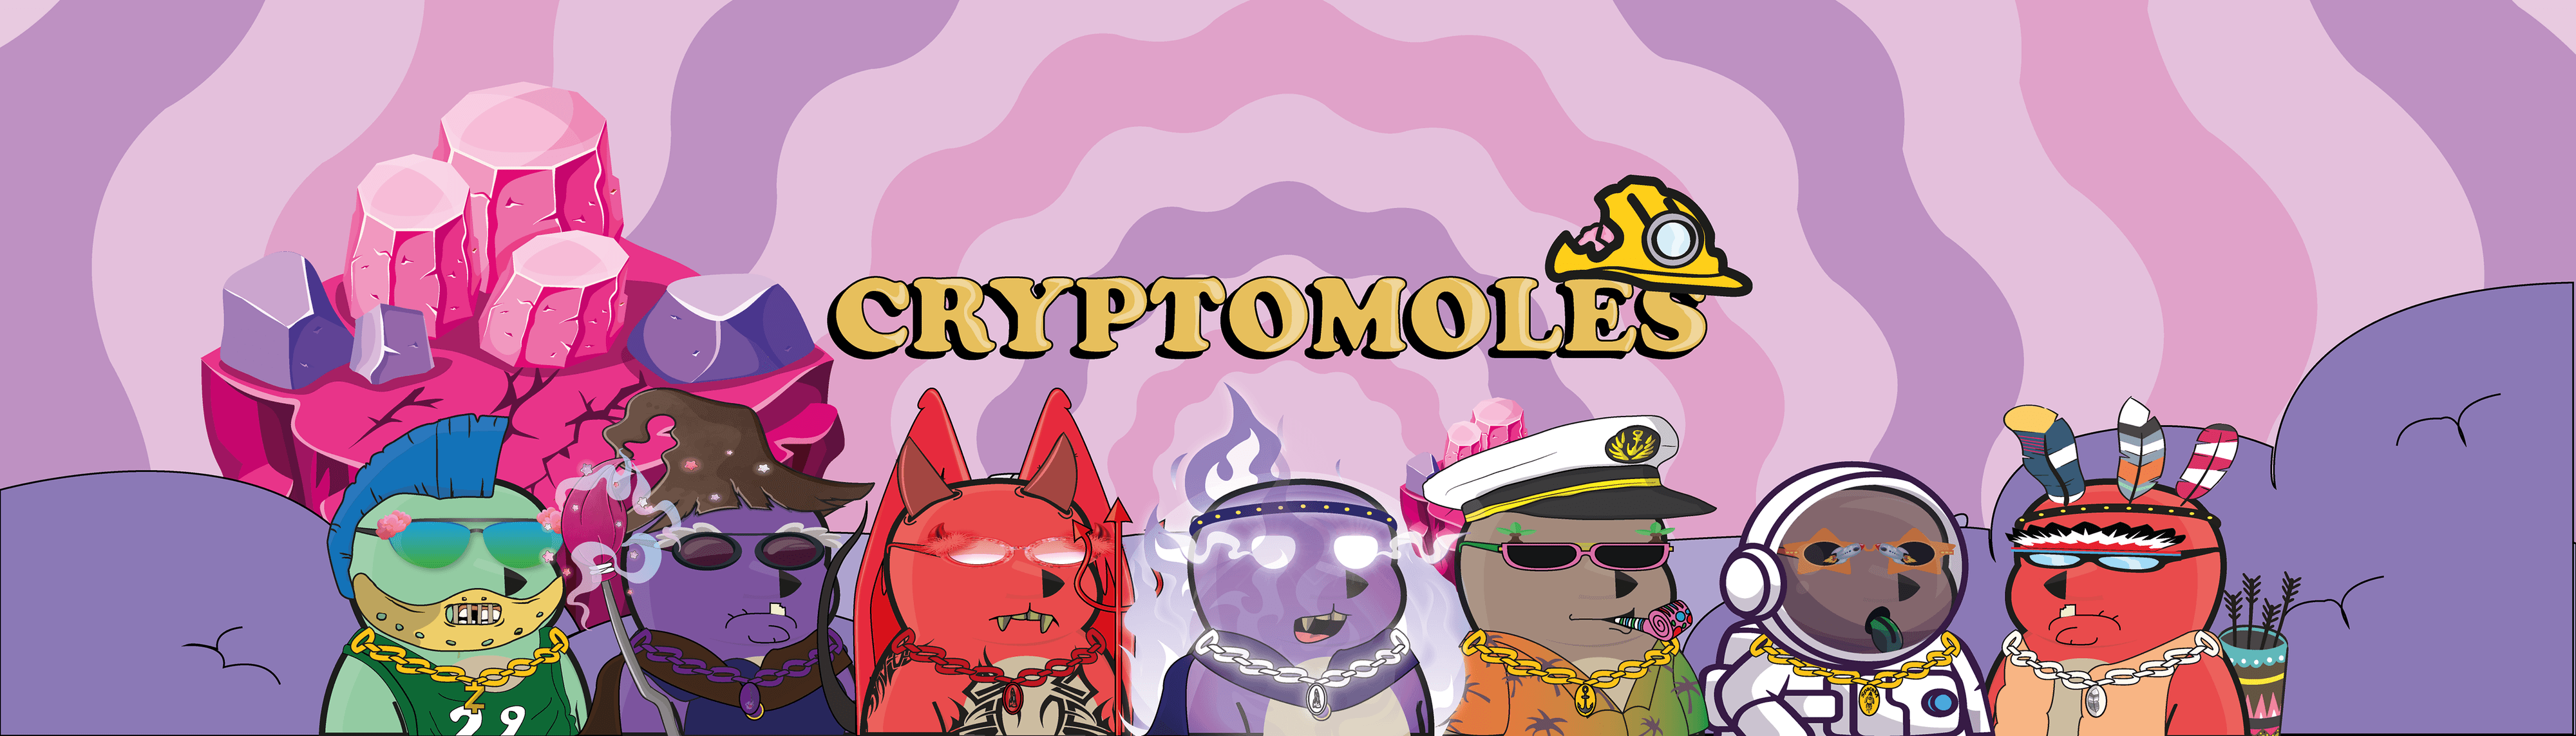 CryptoMoles banner